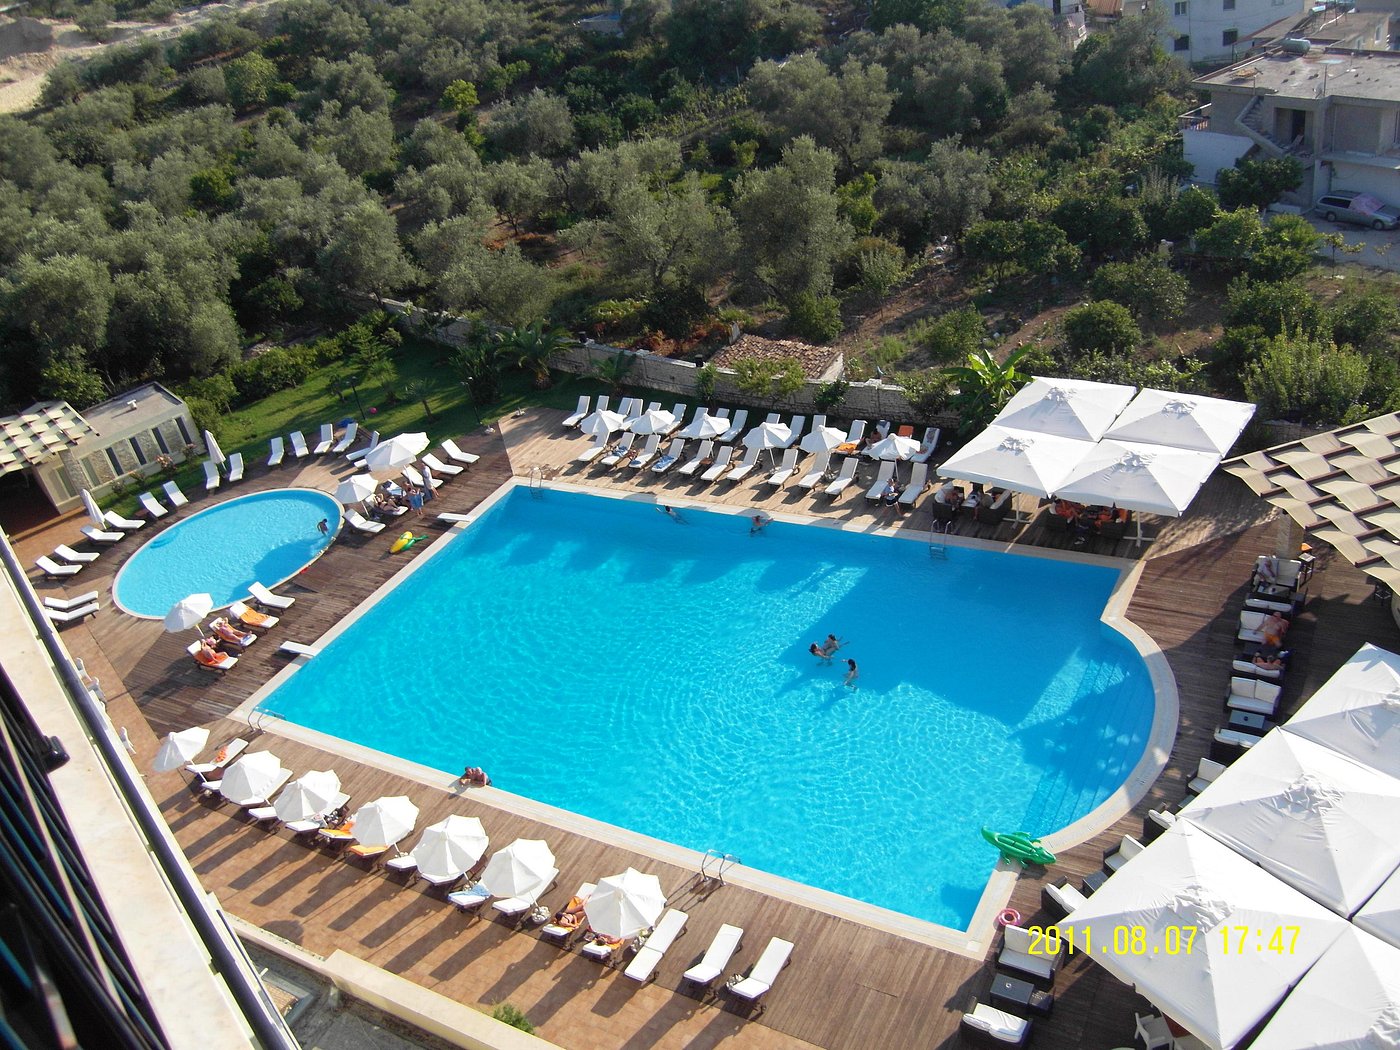 rapo-s-resort-hotel-updated-2023-prices-himare-albania